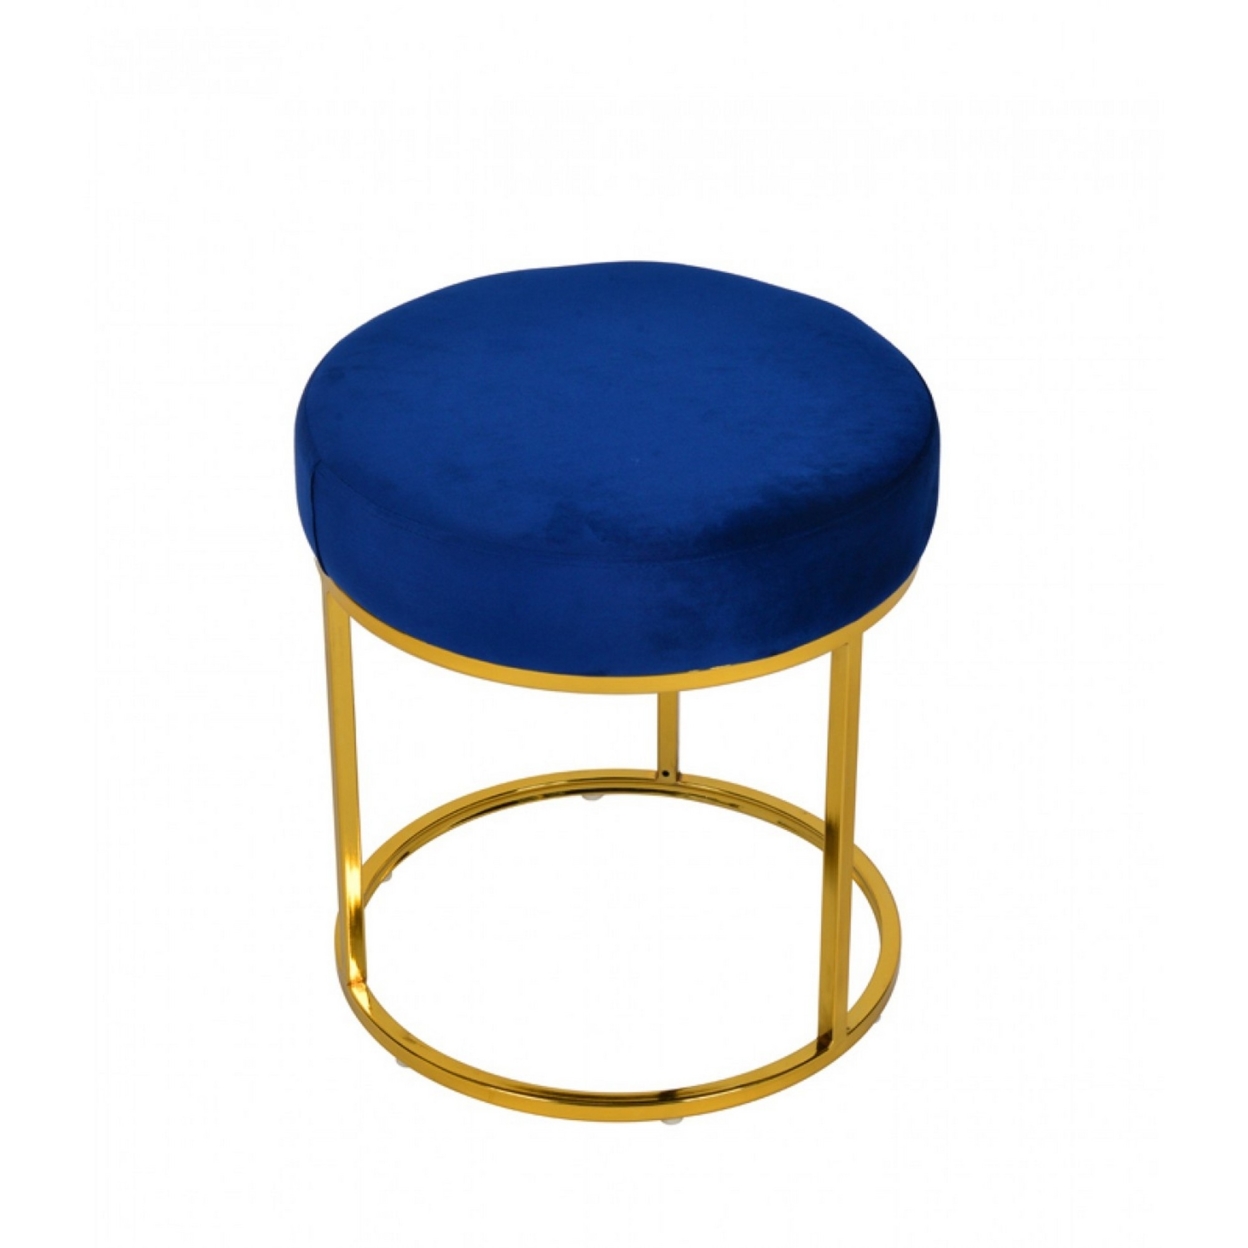 Velvet Upholstered Round Ottoman With Tubular Metal Base, Blue And Gold- Saltoro Sherpi